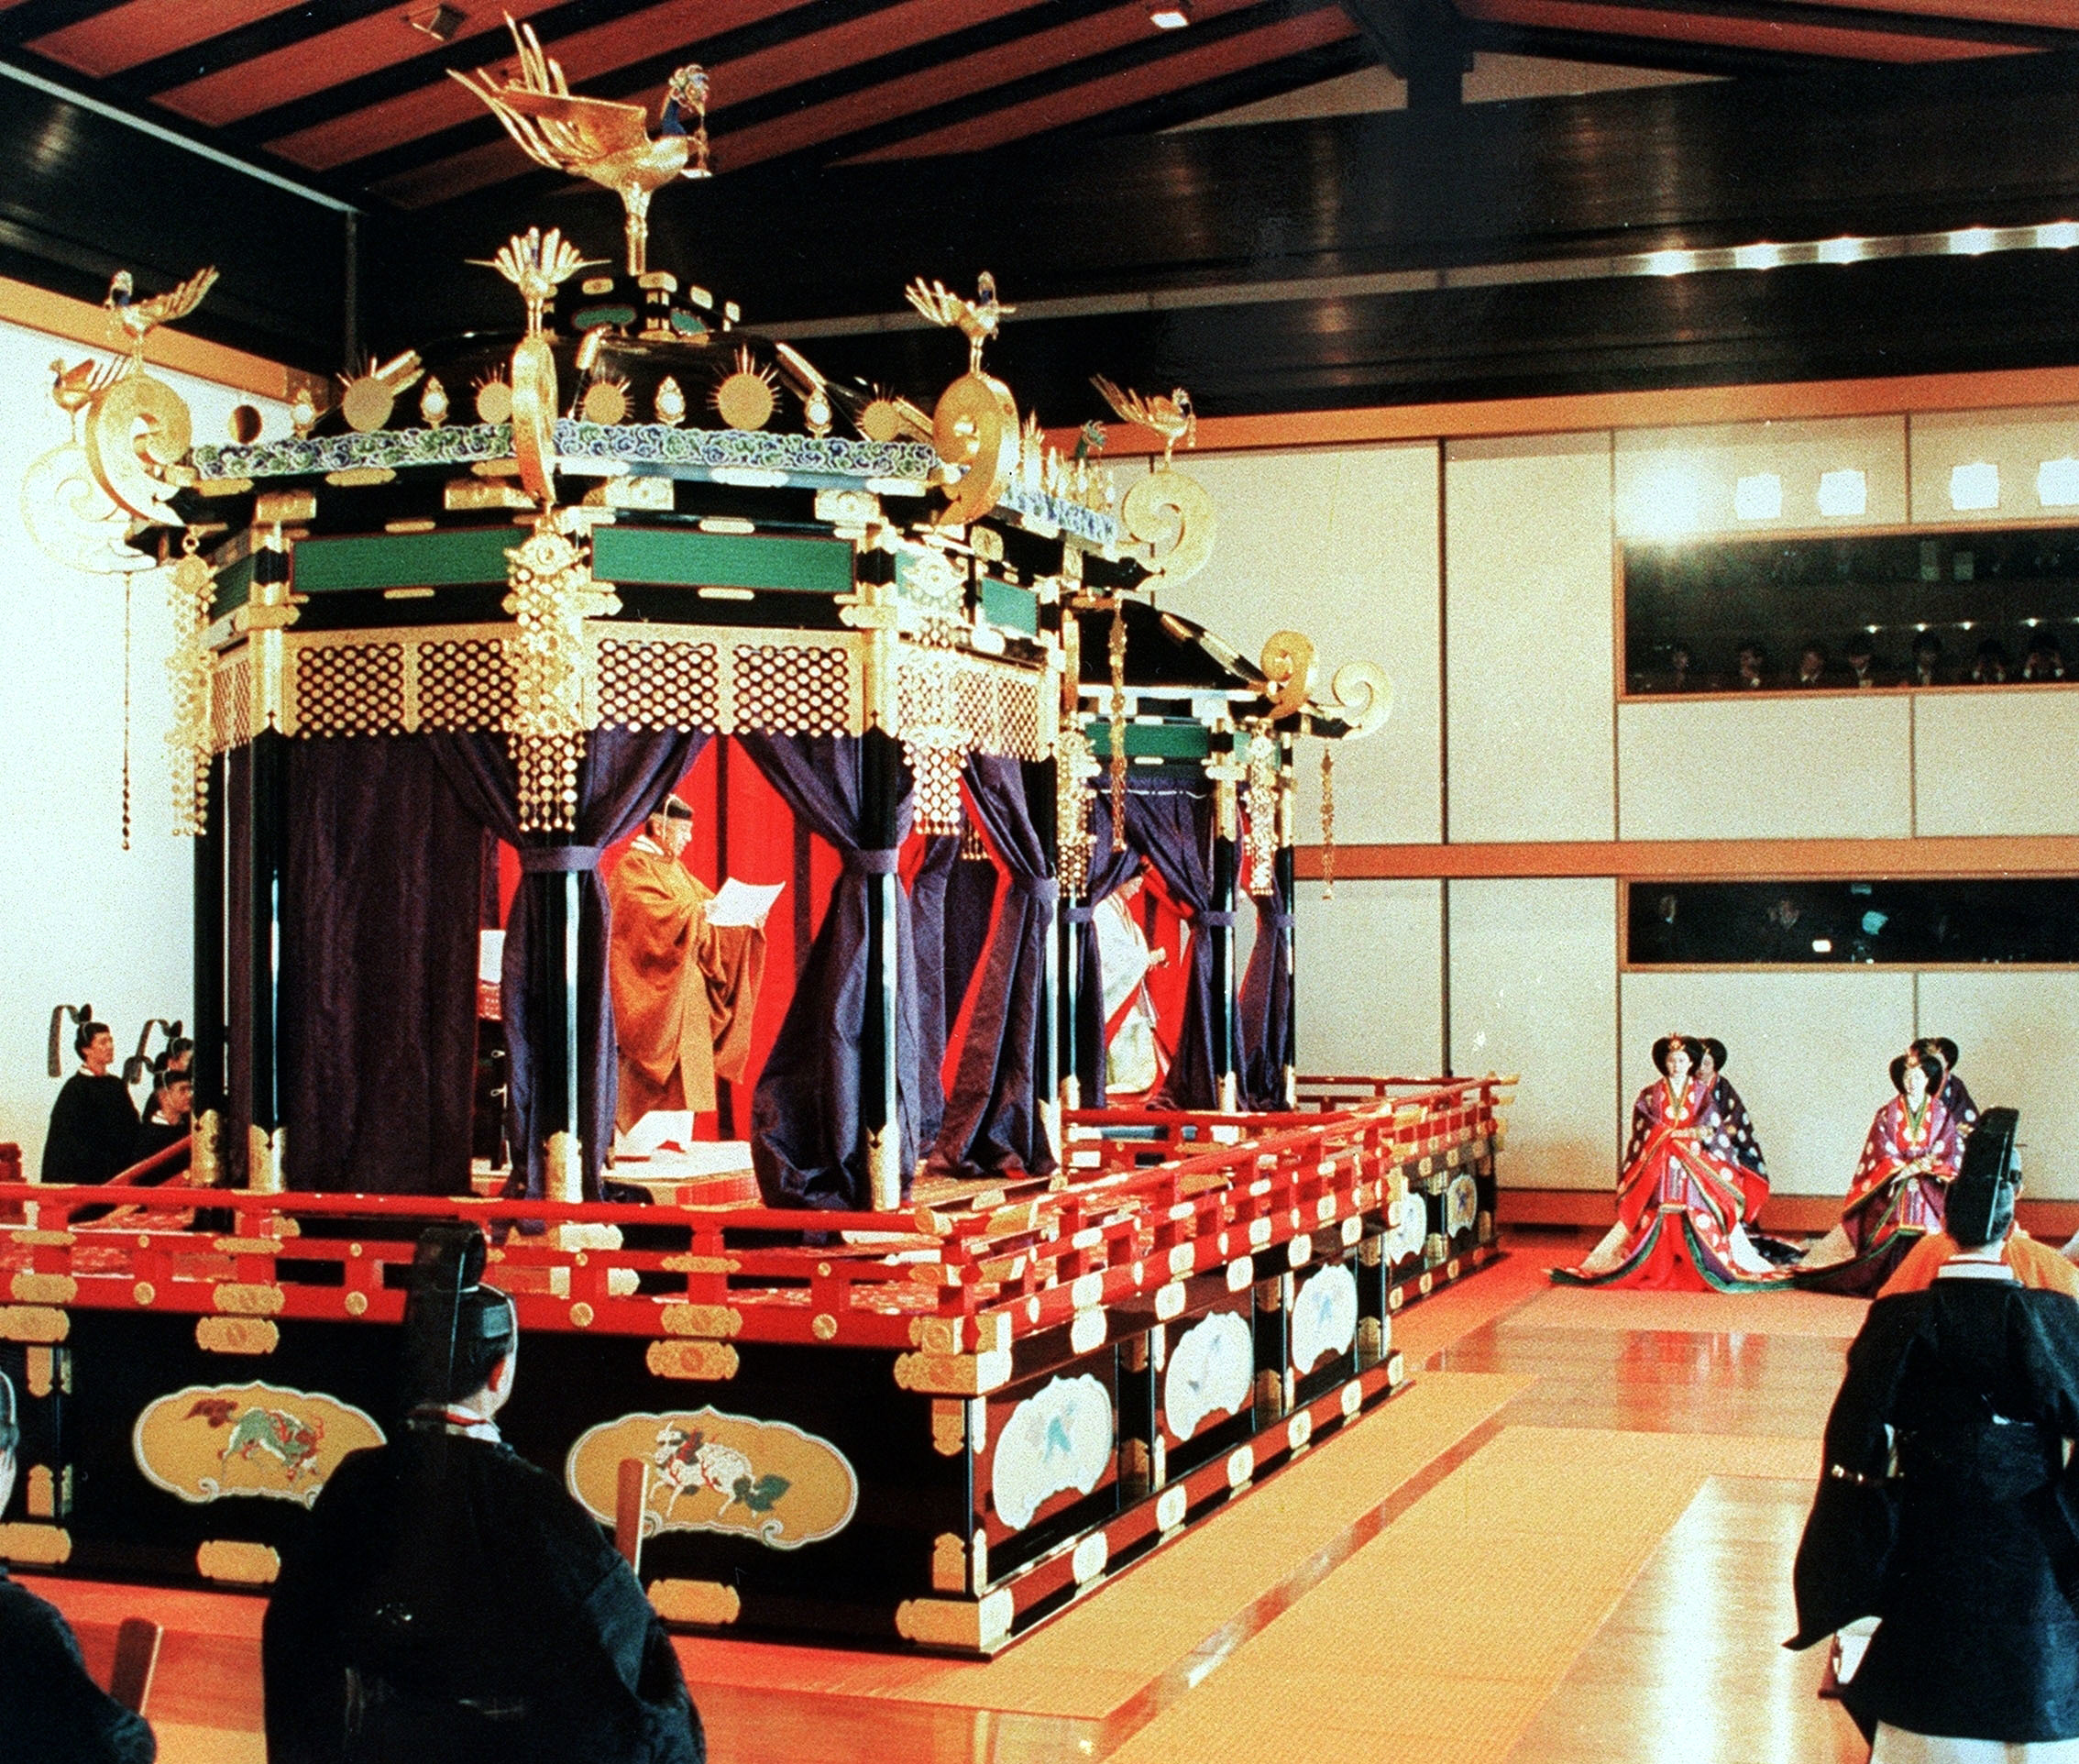 Japan's Emperor Akihito reads an address on the Takamikura throne in 1990